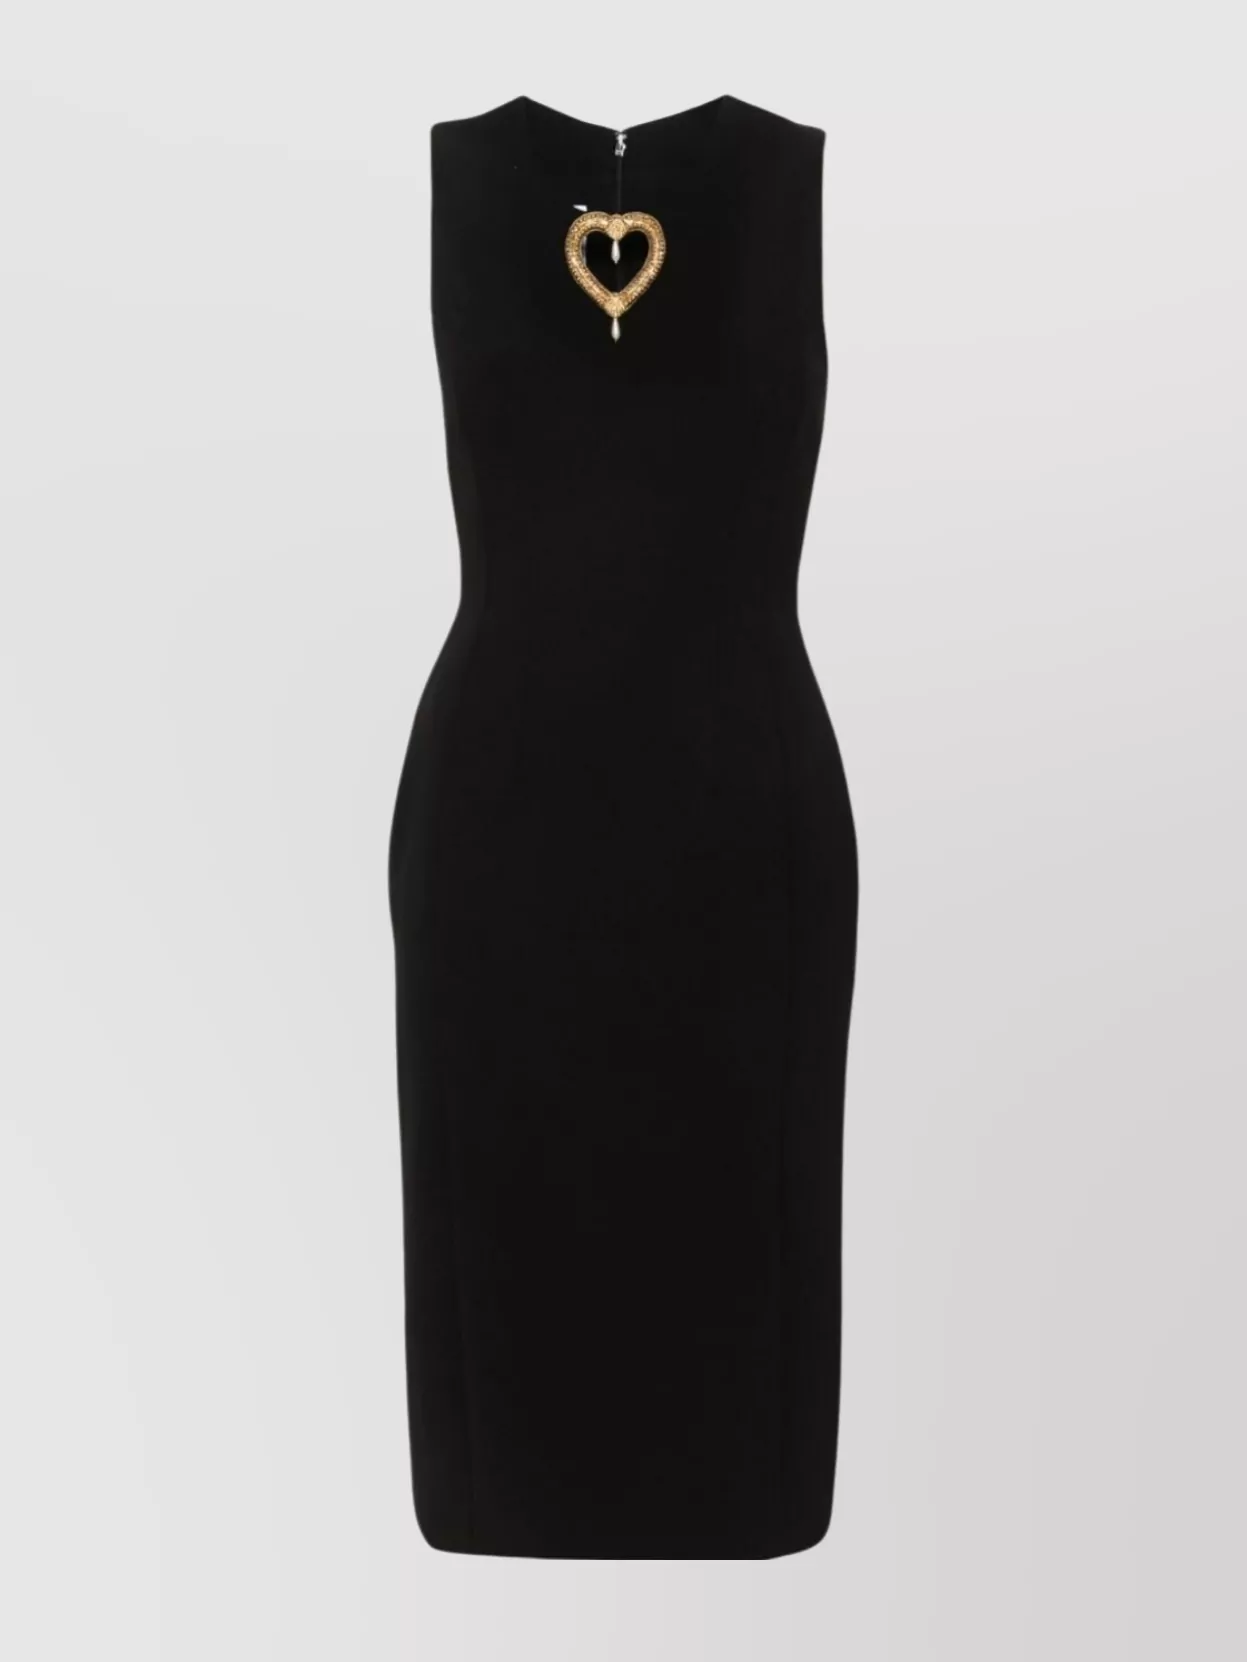 Shop Moschino Knee Length Dress Featuring Heart-shaped Detailing